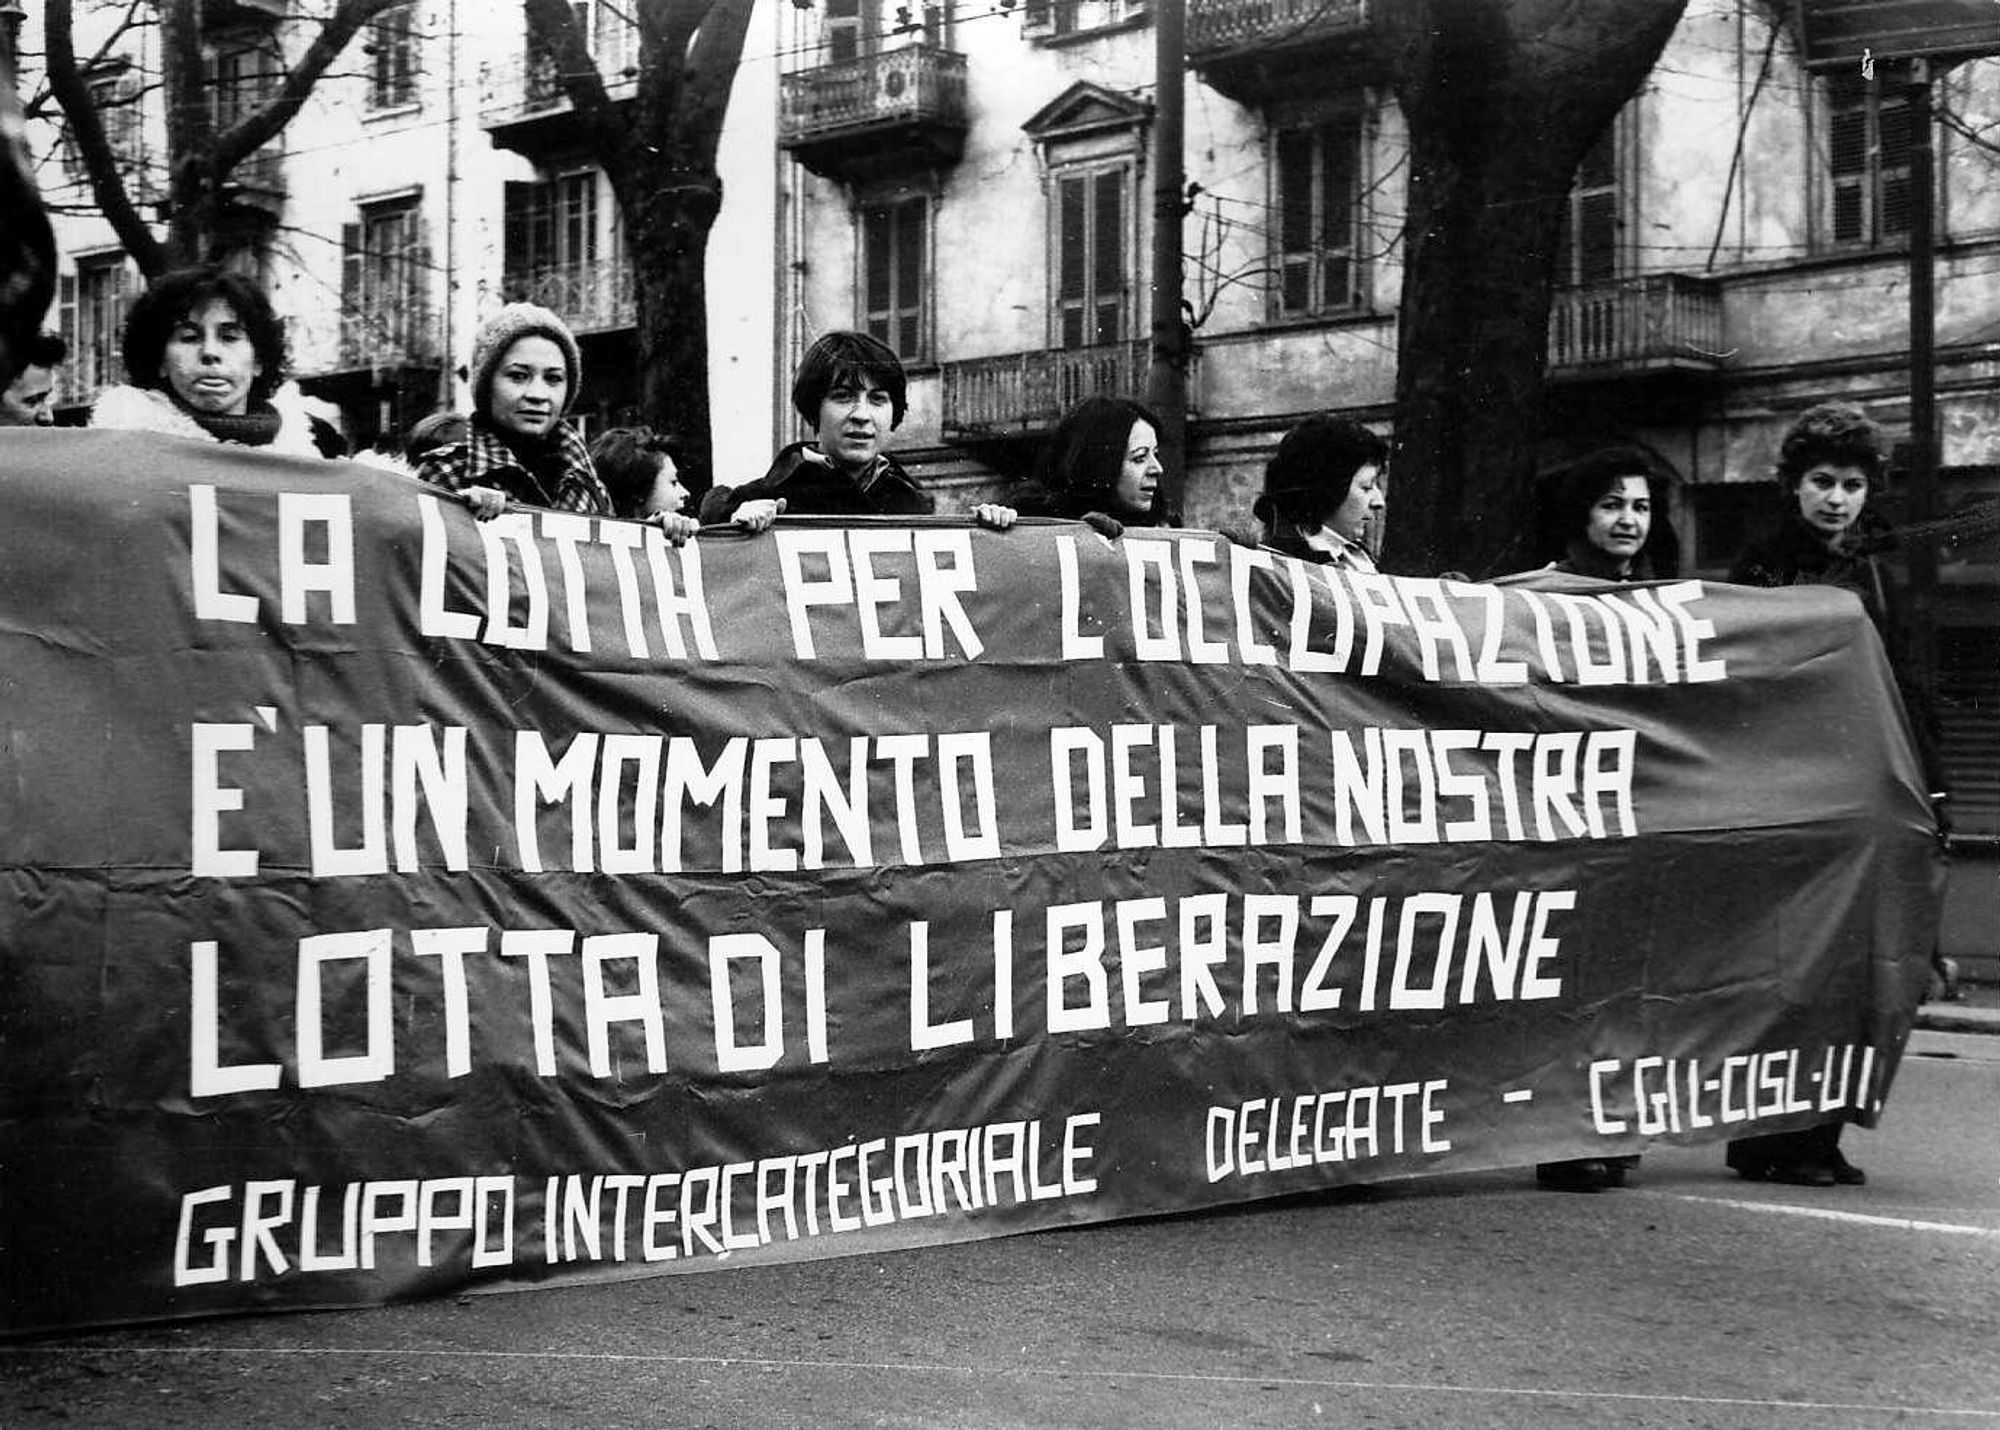 Gruppo Intercategoriale protest, 1974